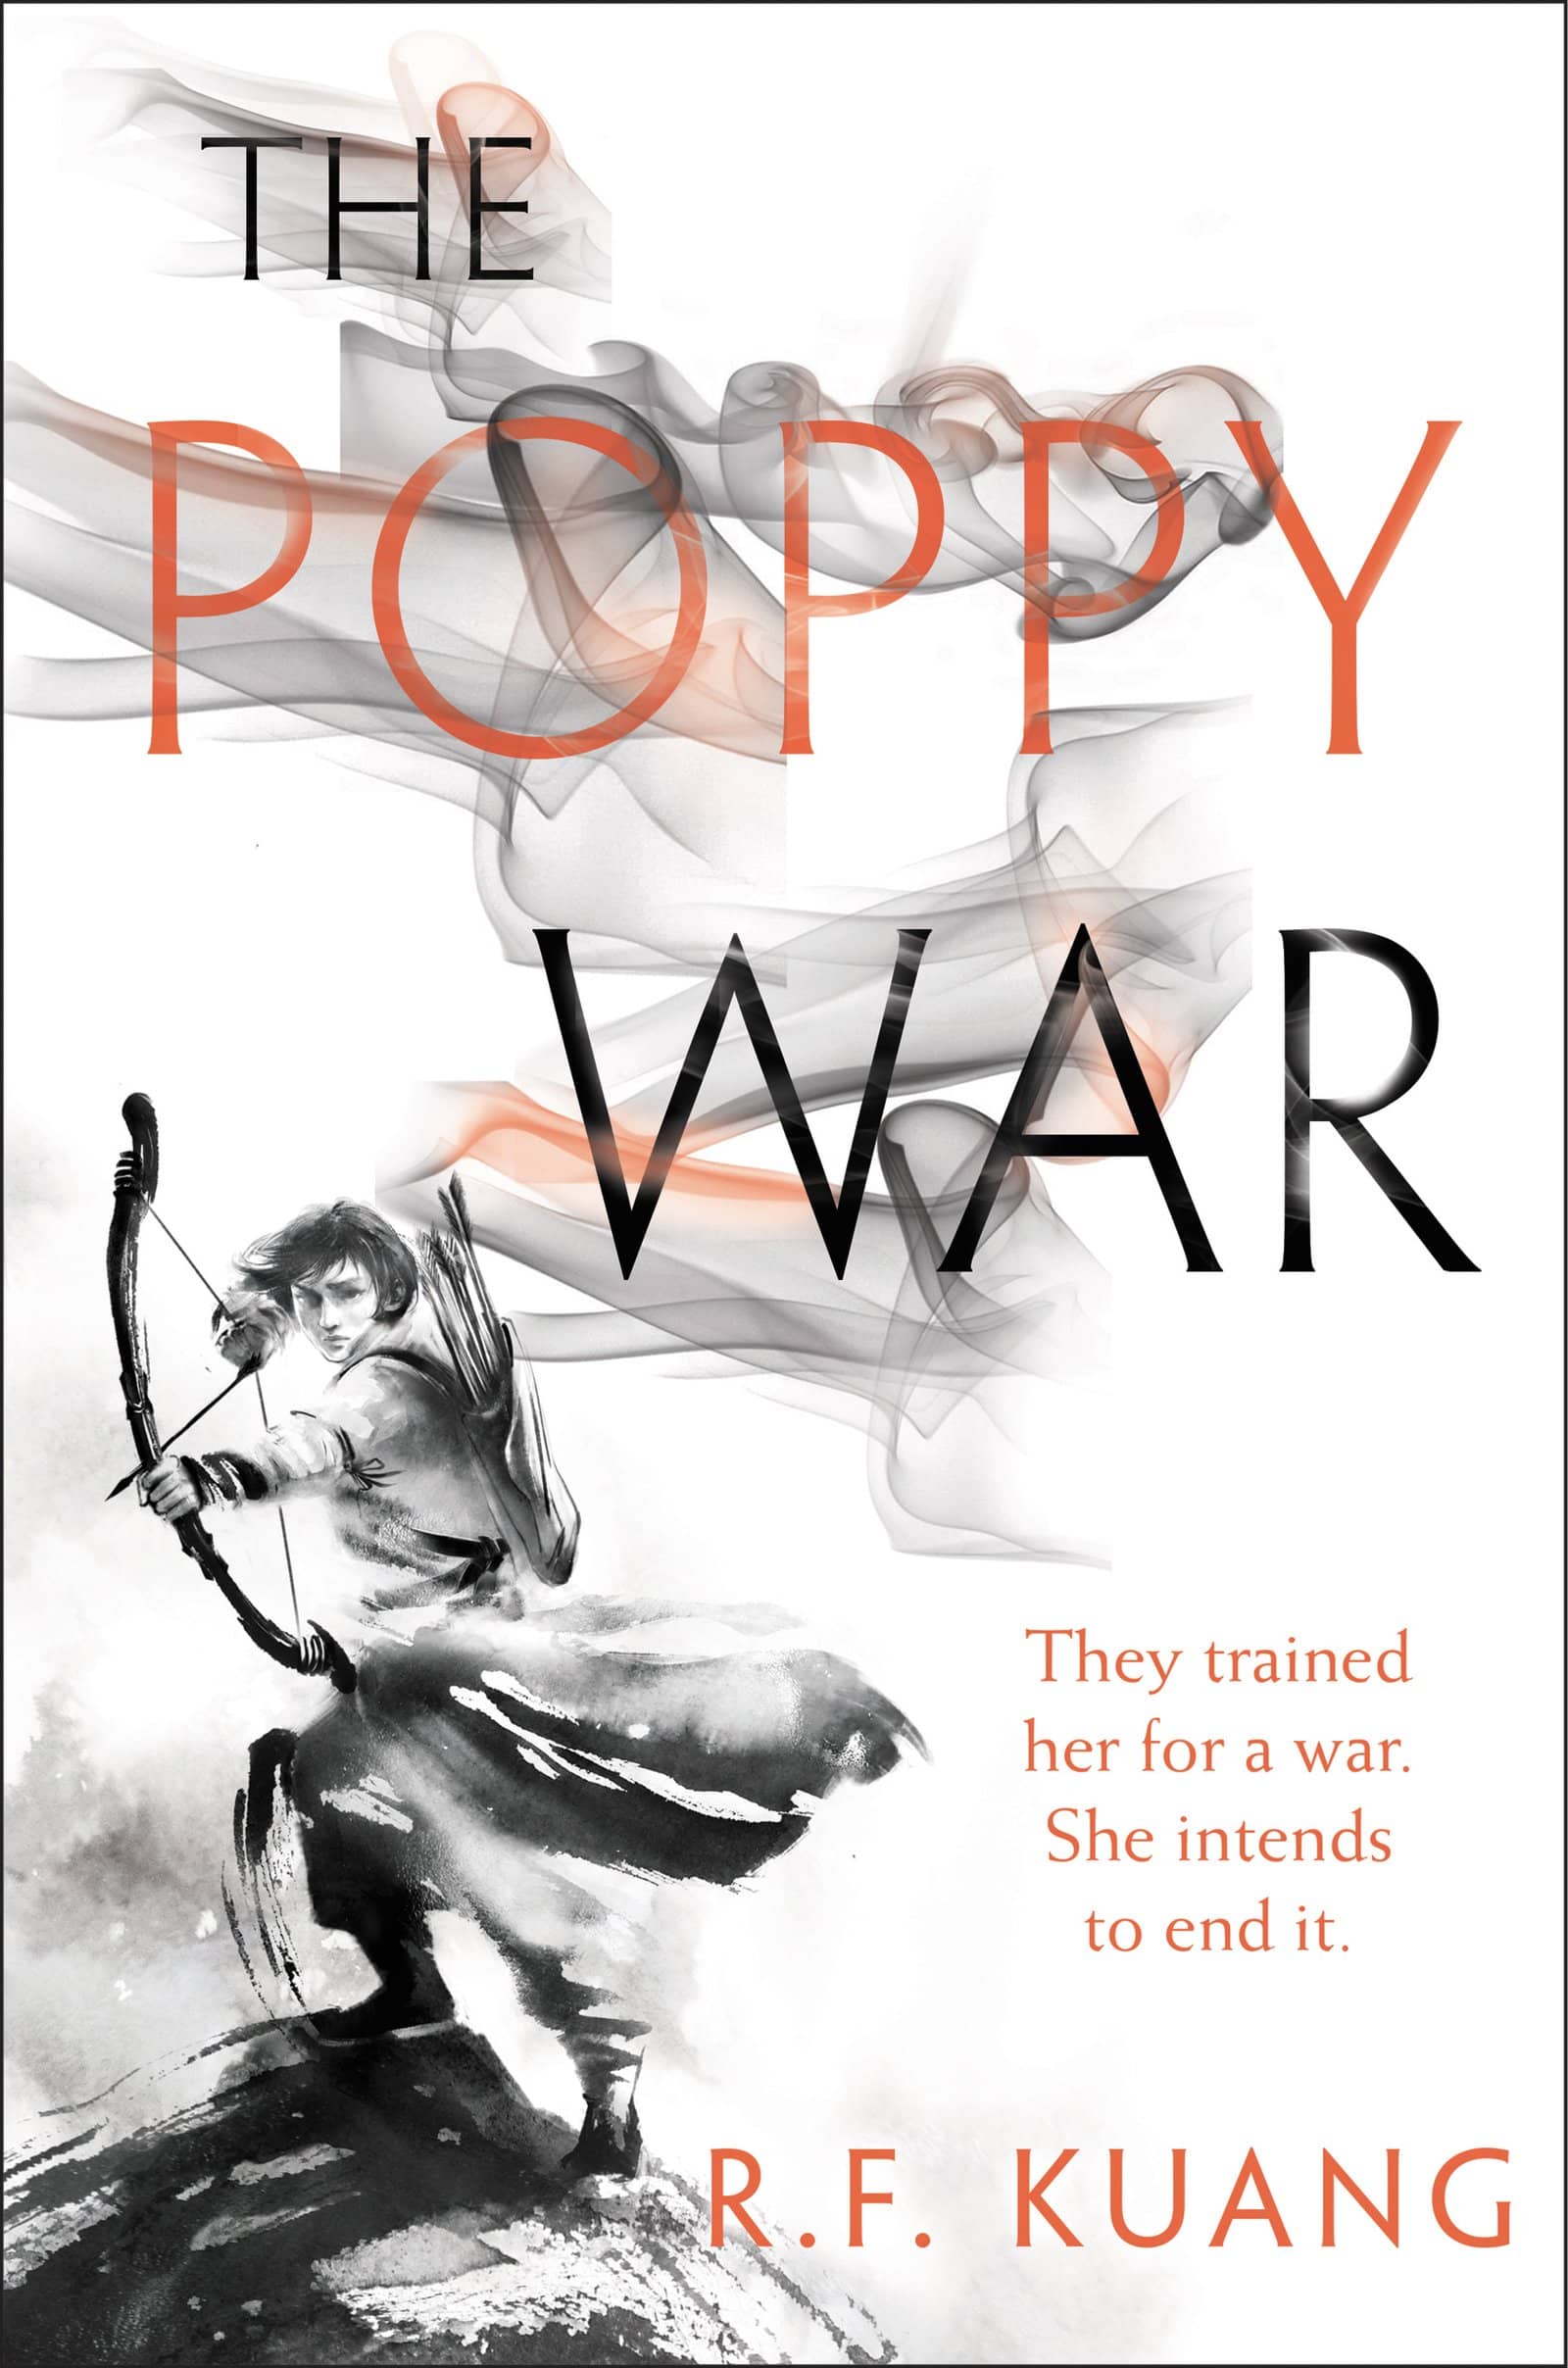 R. F. Kuang: The Poppy War (Hardcover, 2018, Harper Voyager)